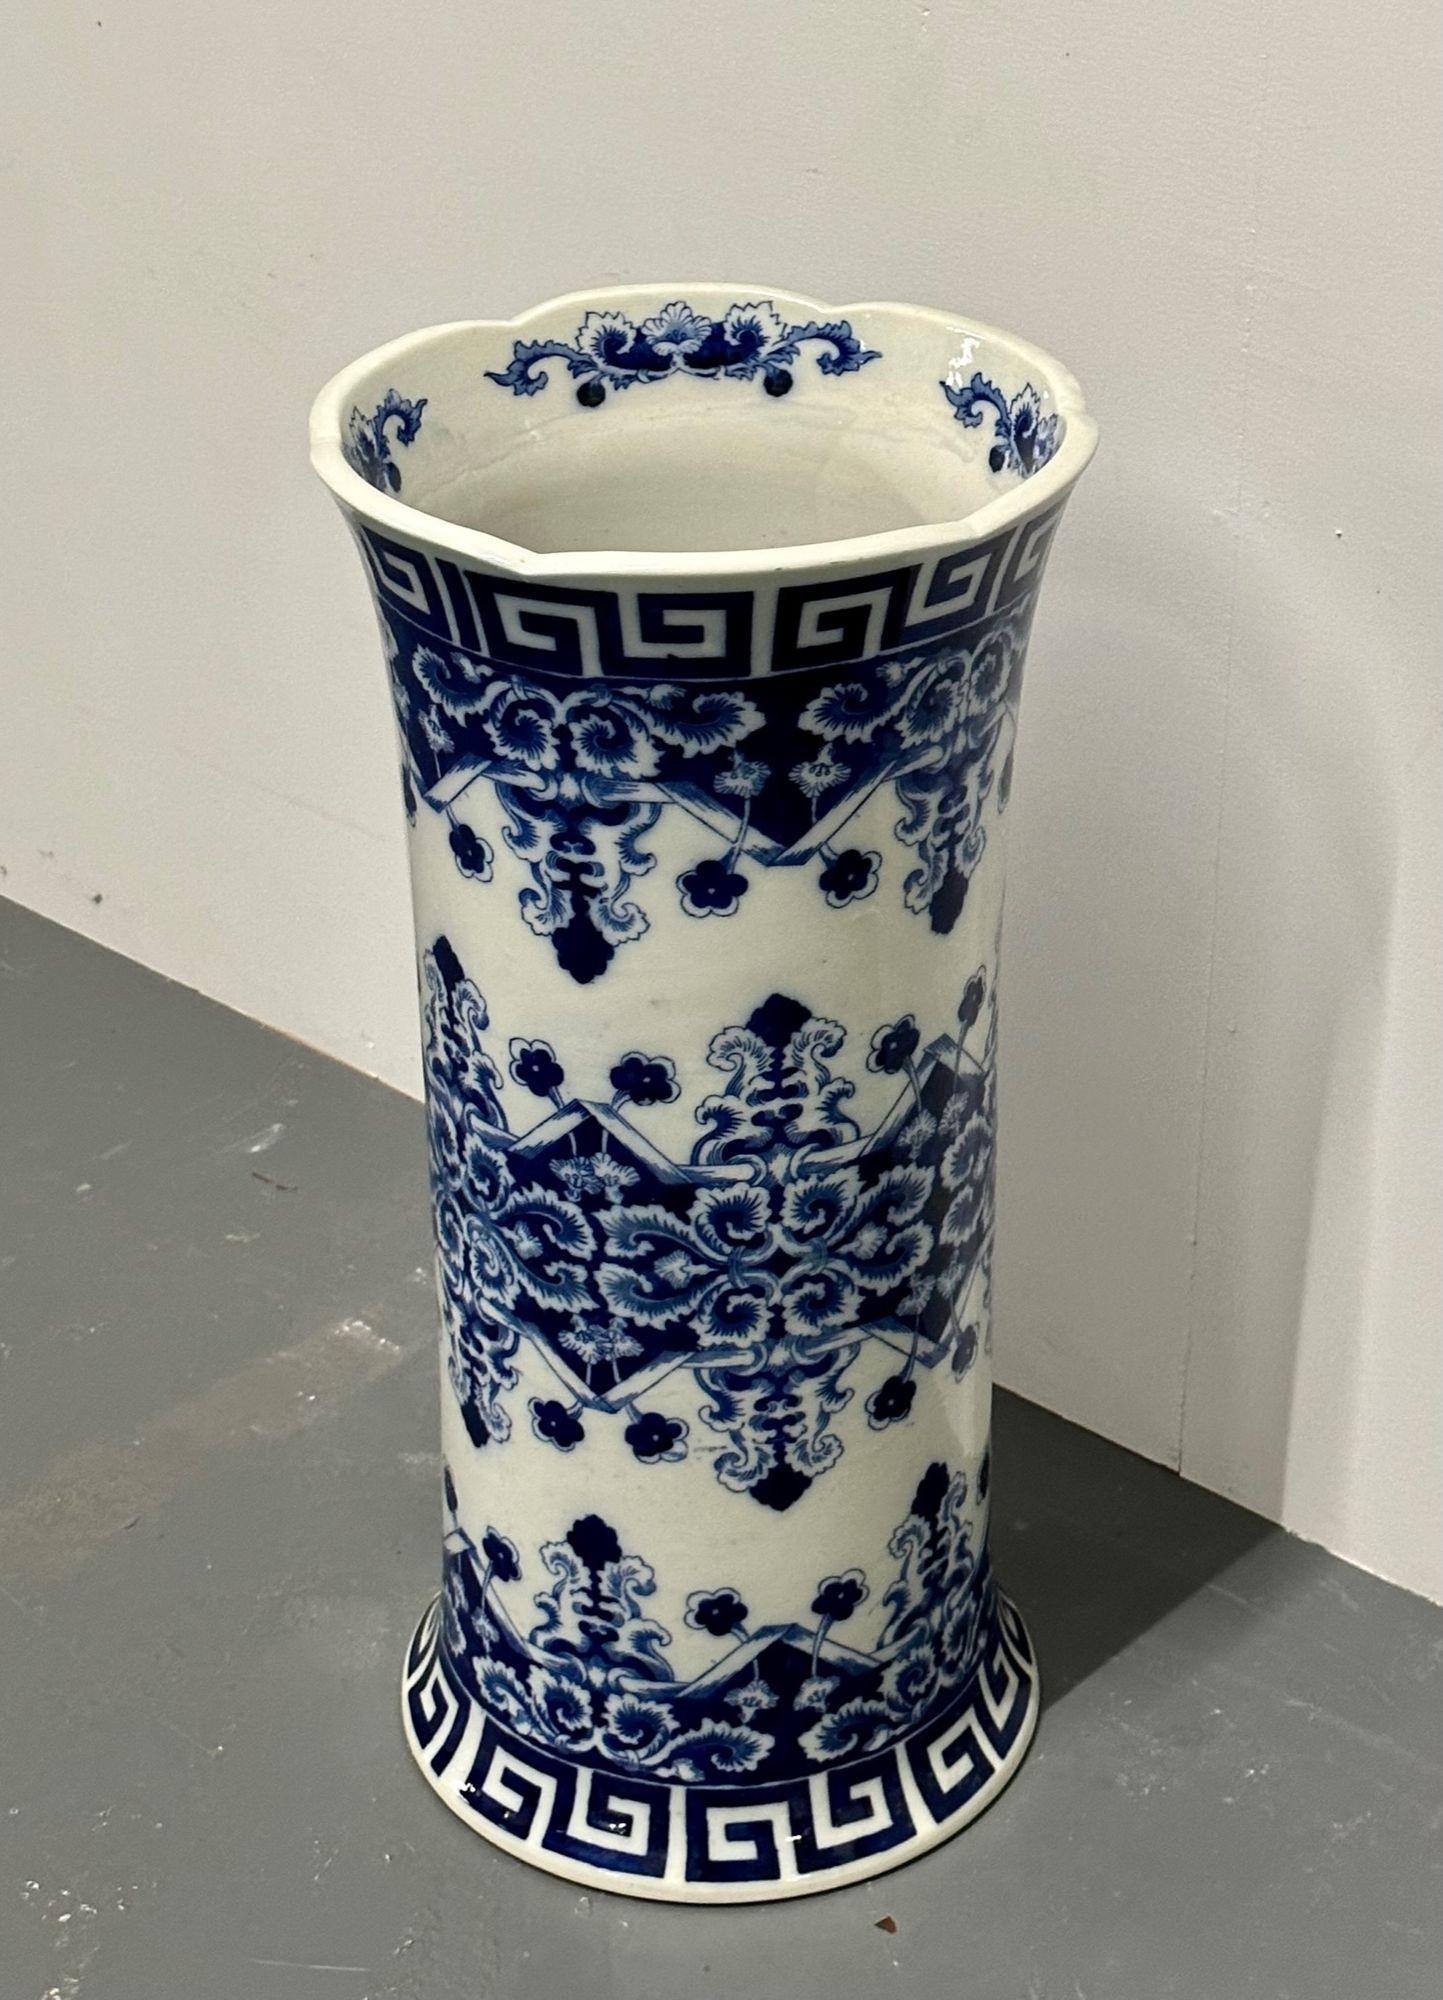 Oriental Porcelain Flow Blue White Umbrella Stand, Large Vase, Floral Decorated
 
Very pretty porcelain blue and white oriental umbrella stand or large vase. Decorated with a gorgeous blue floral and Greek key motif. 
 
SX